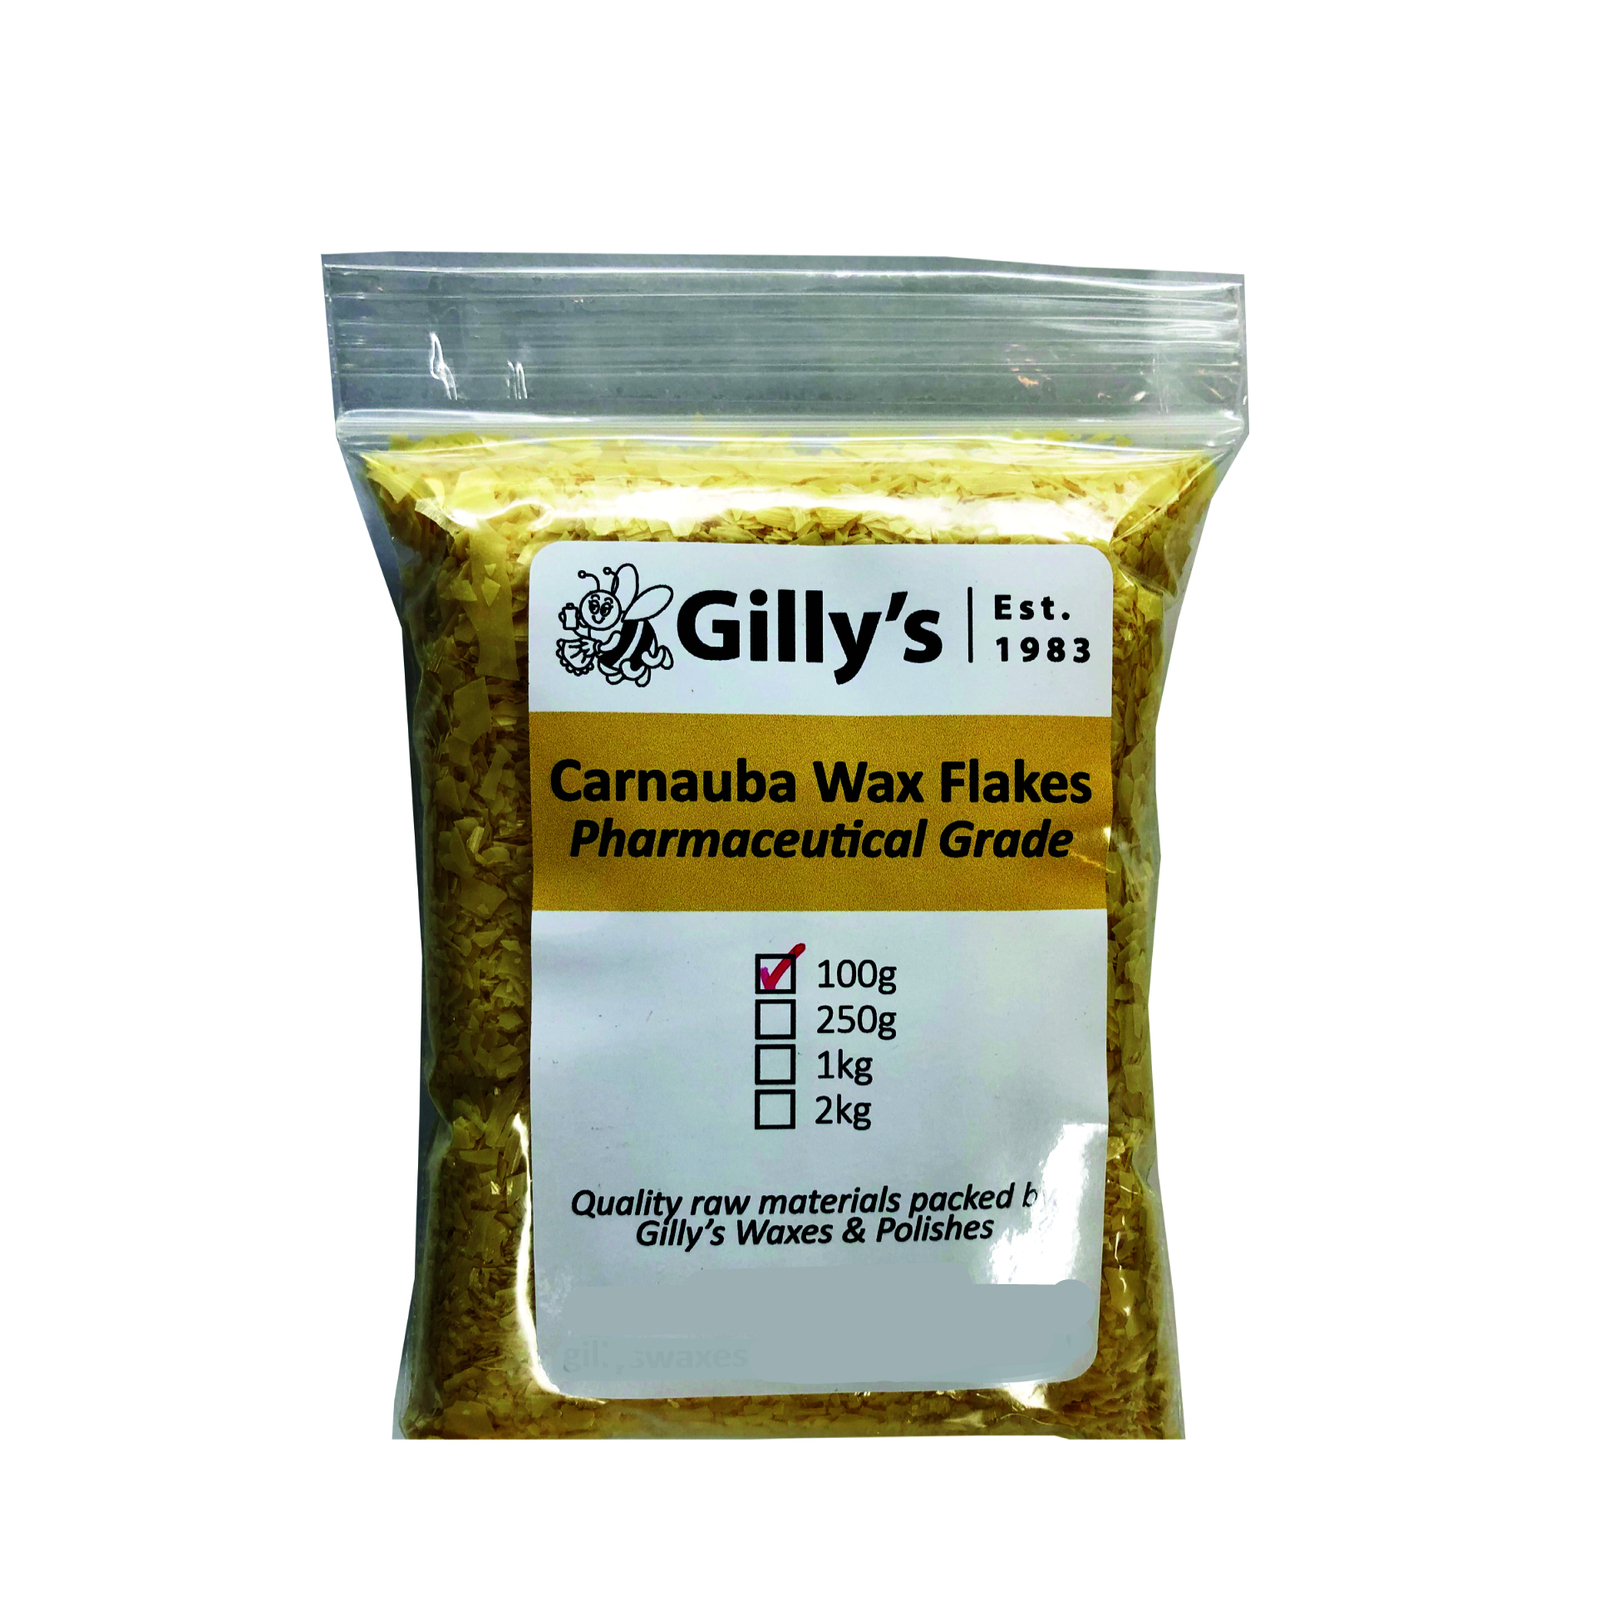 Gilly's Carnauba Wax Flakes for Furniture Polish/Car Wax/Candy